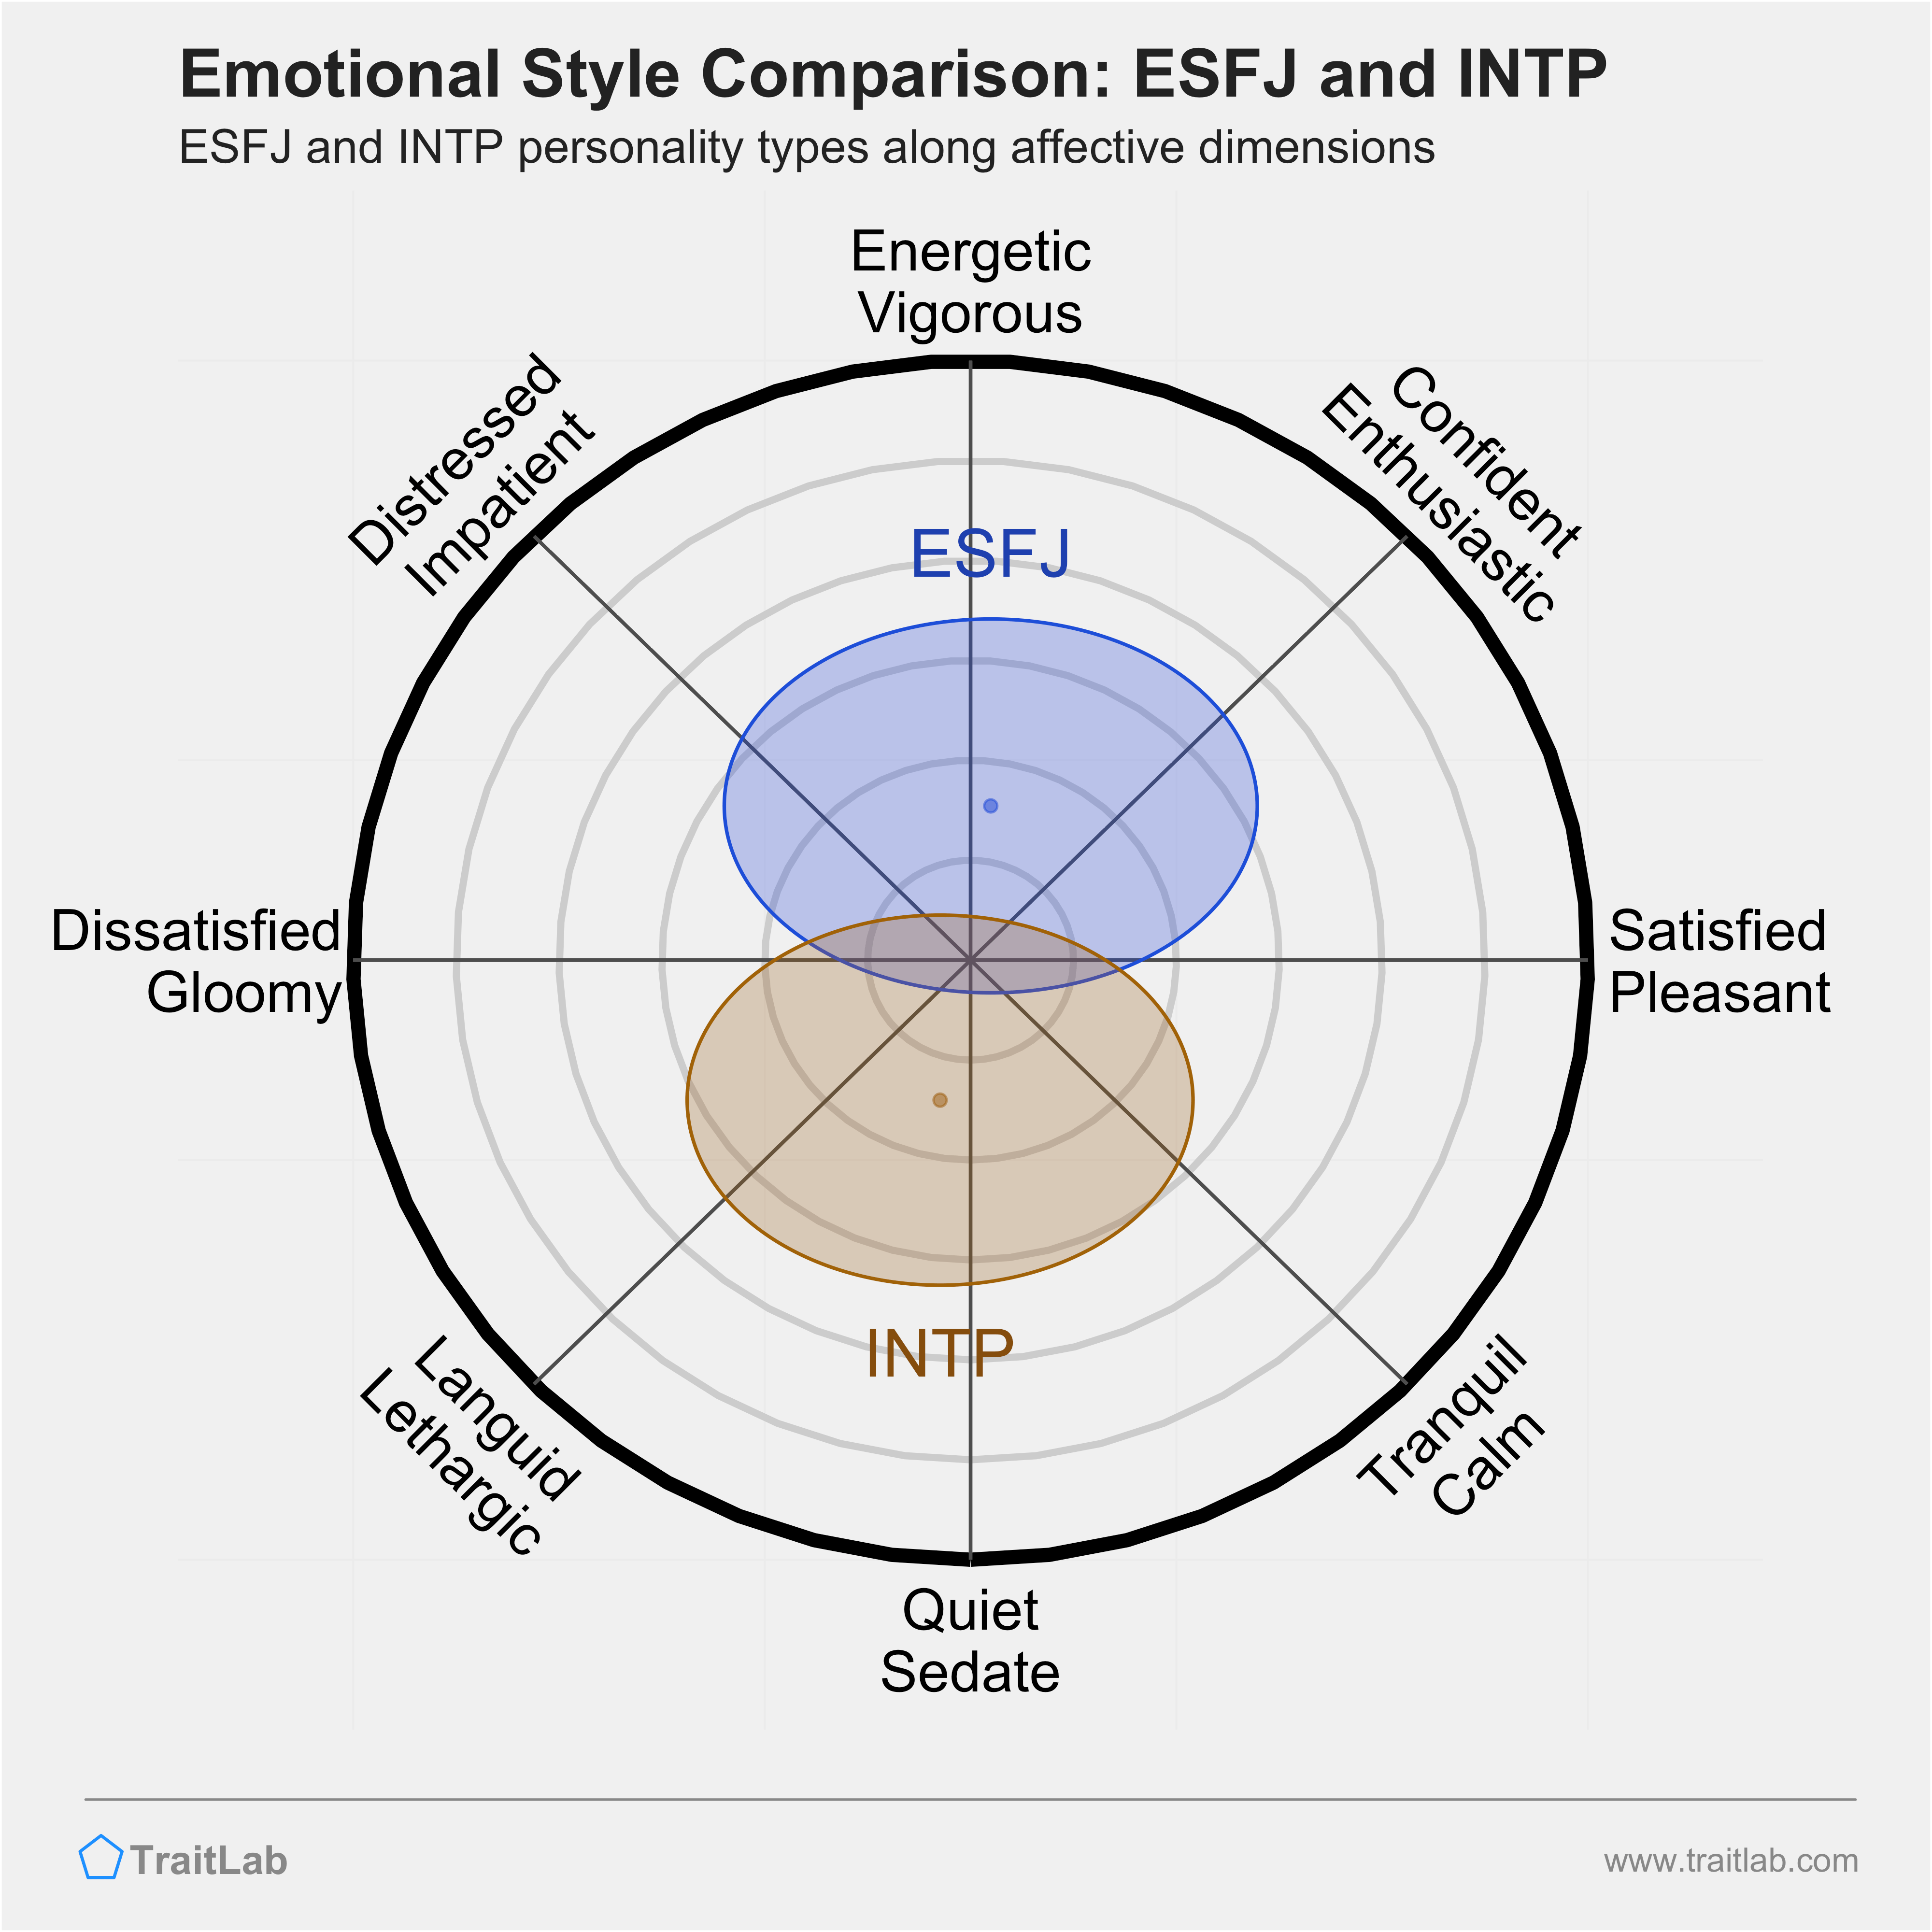 ESFJ and INTP comparison across emotional (affective) dimensions